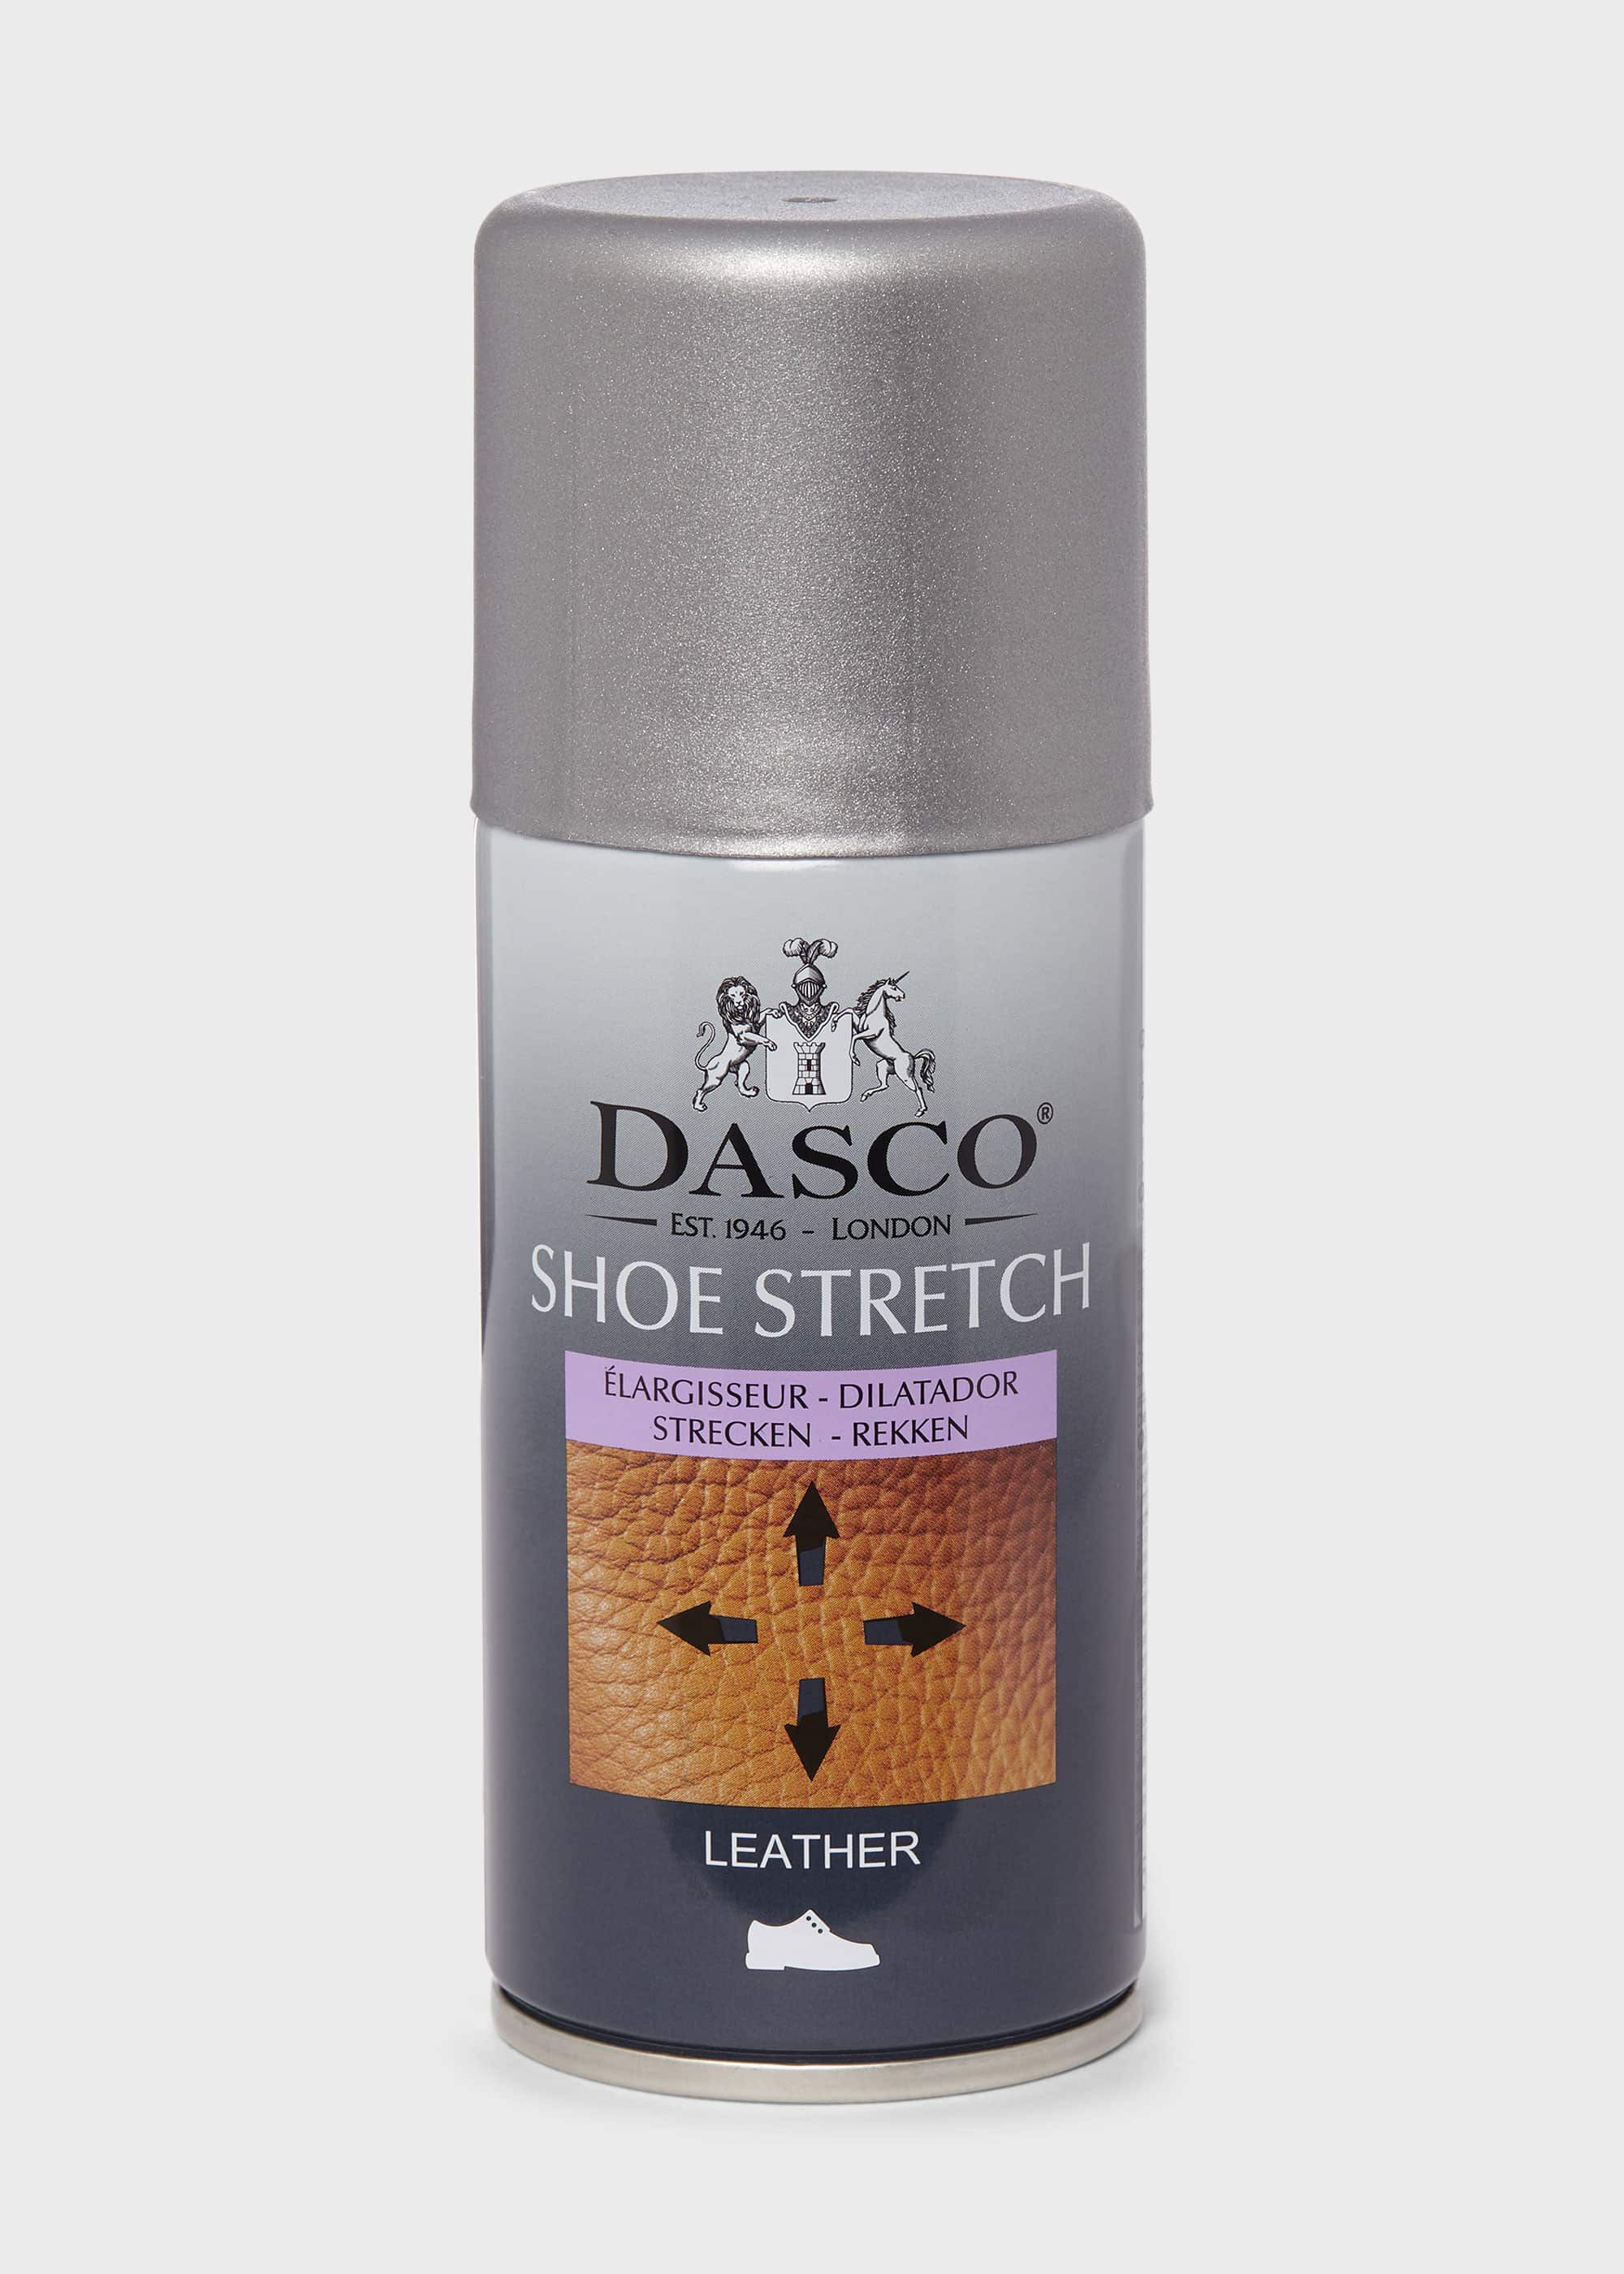 dasco leather stretch